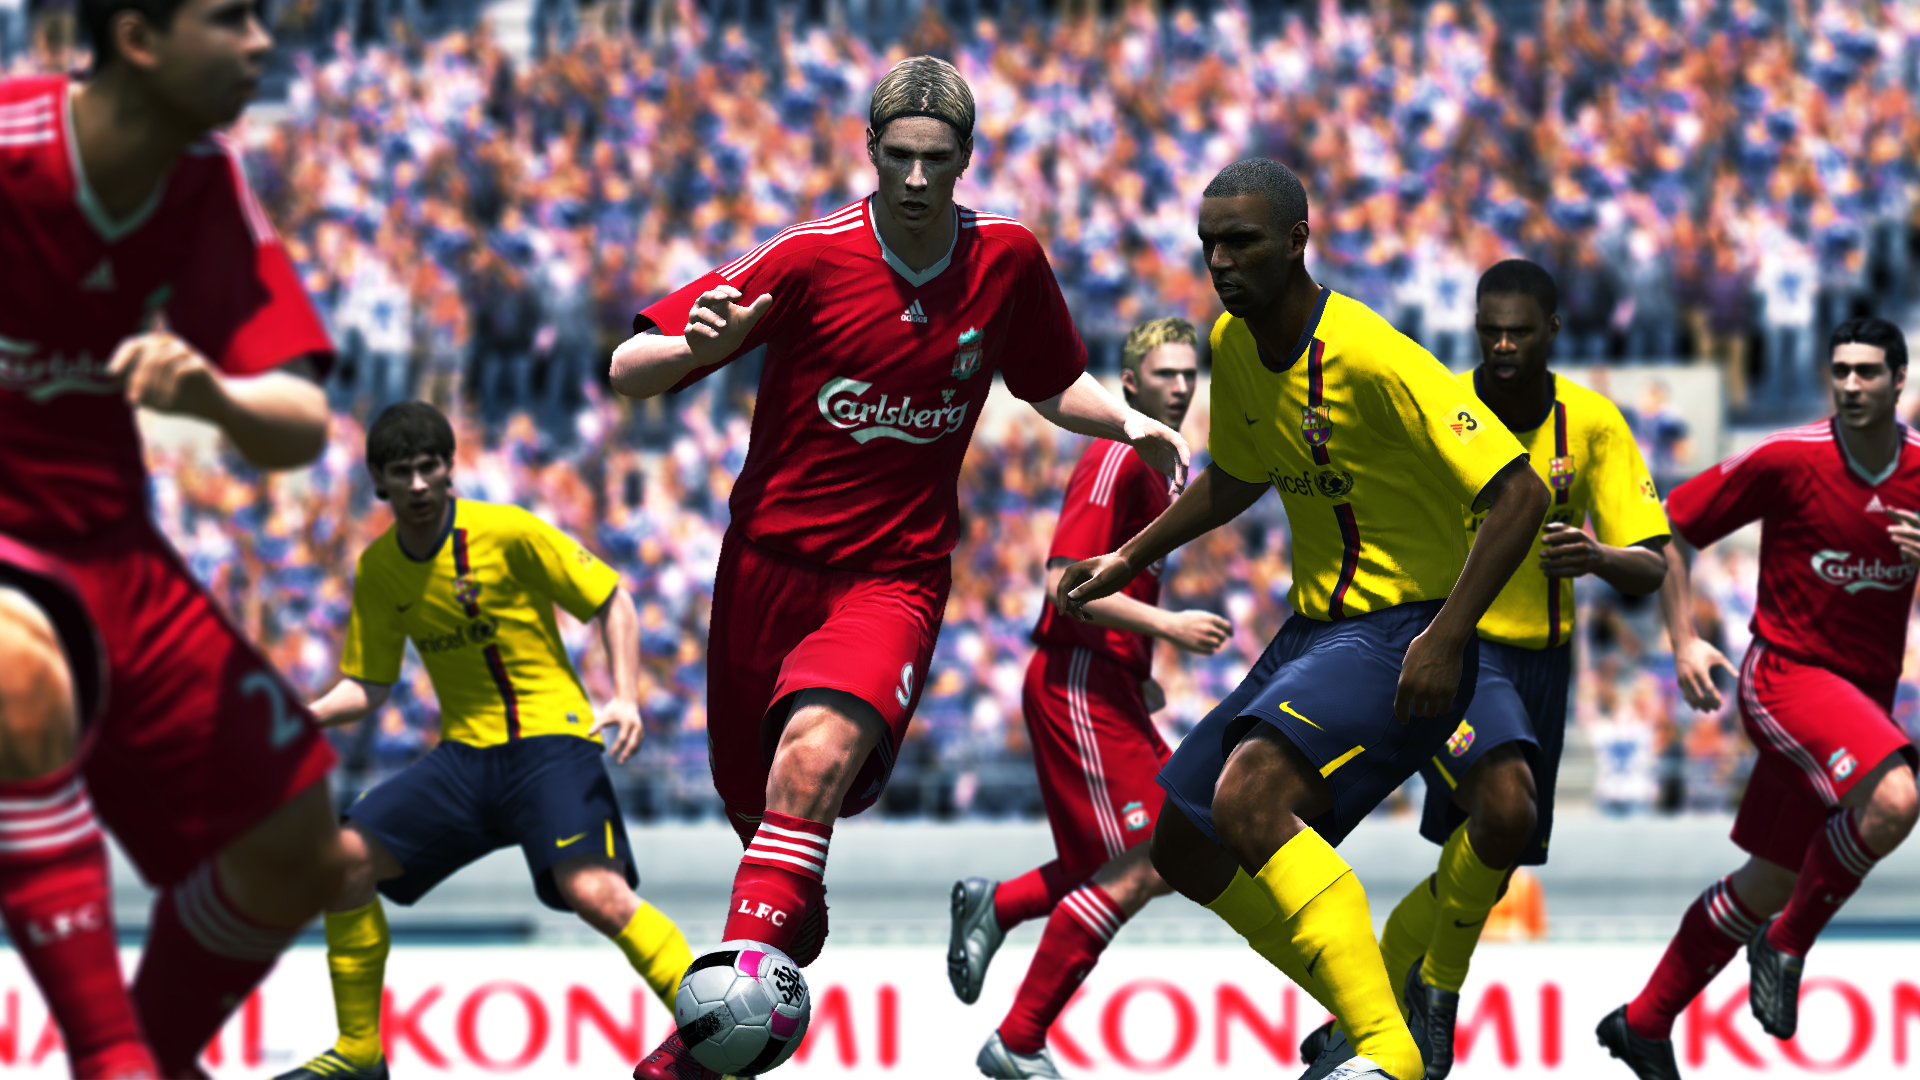 Pro evolution soccer 2010 free download for mac